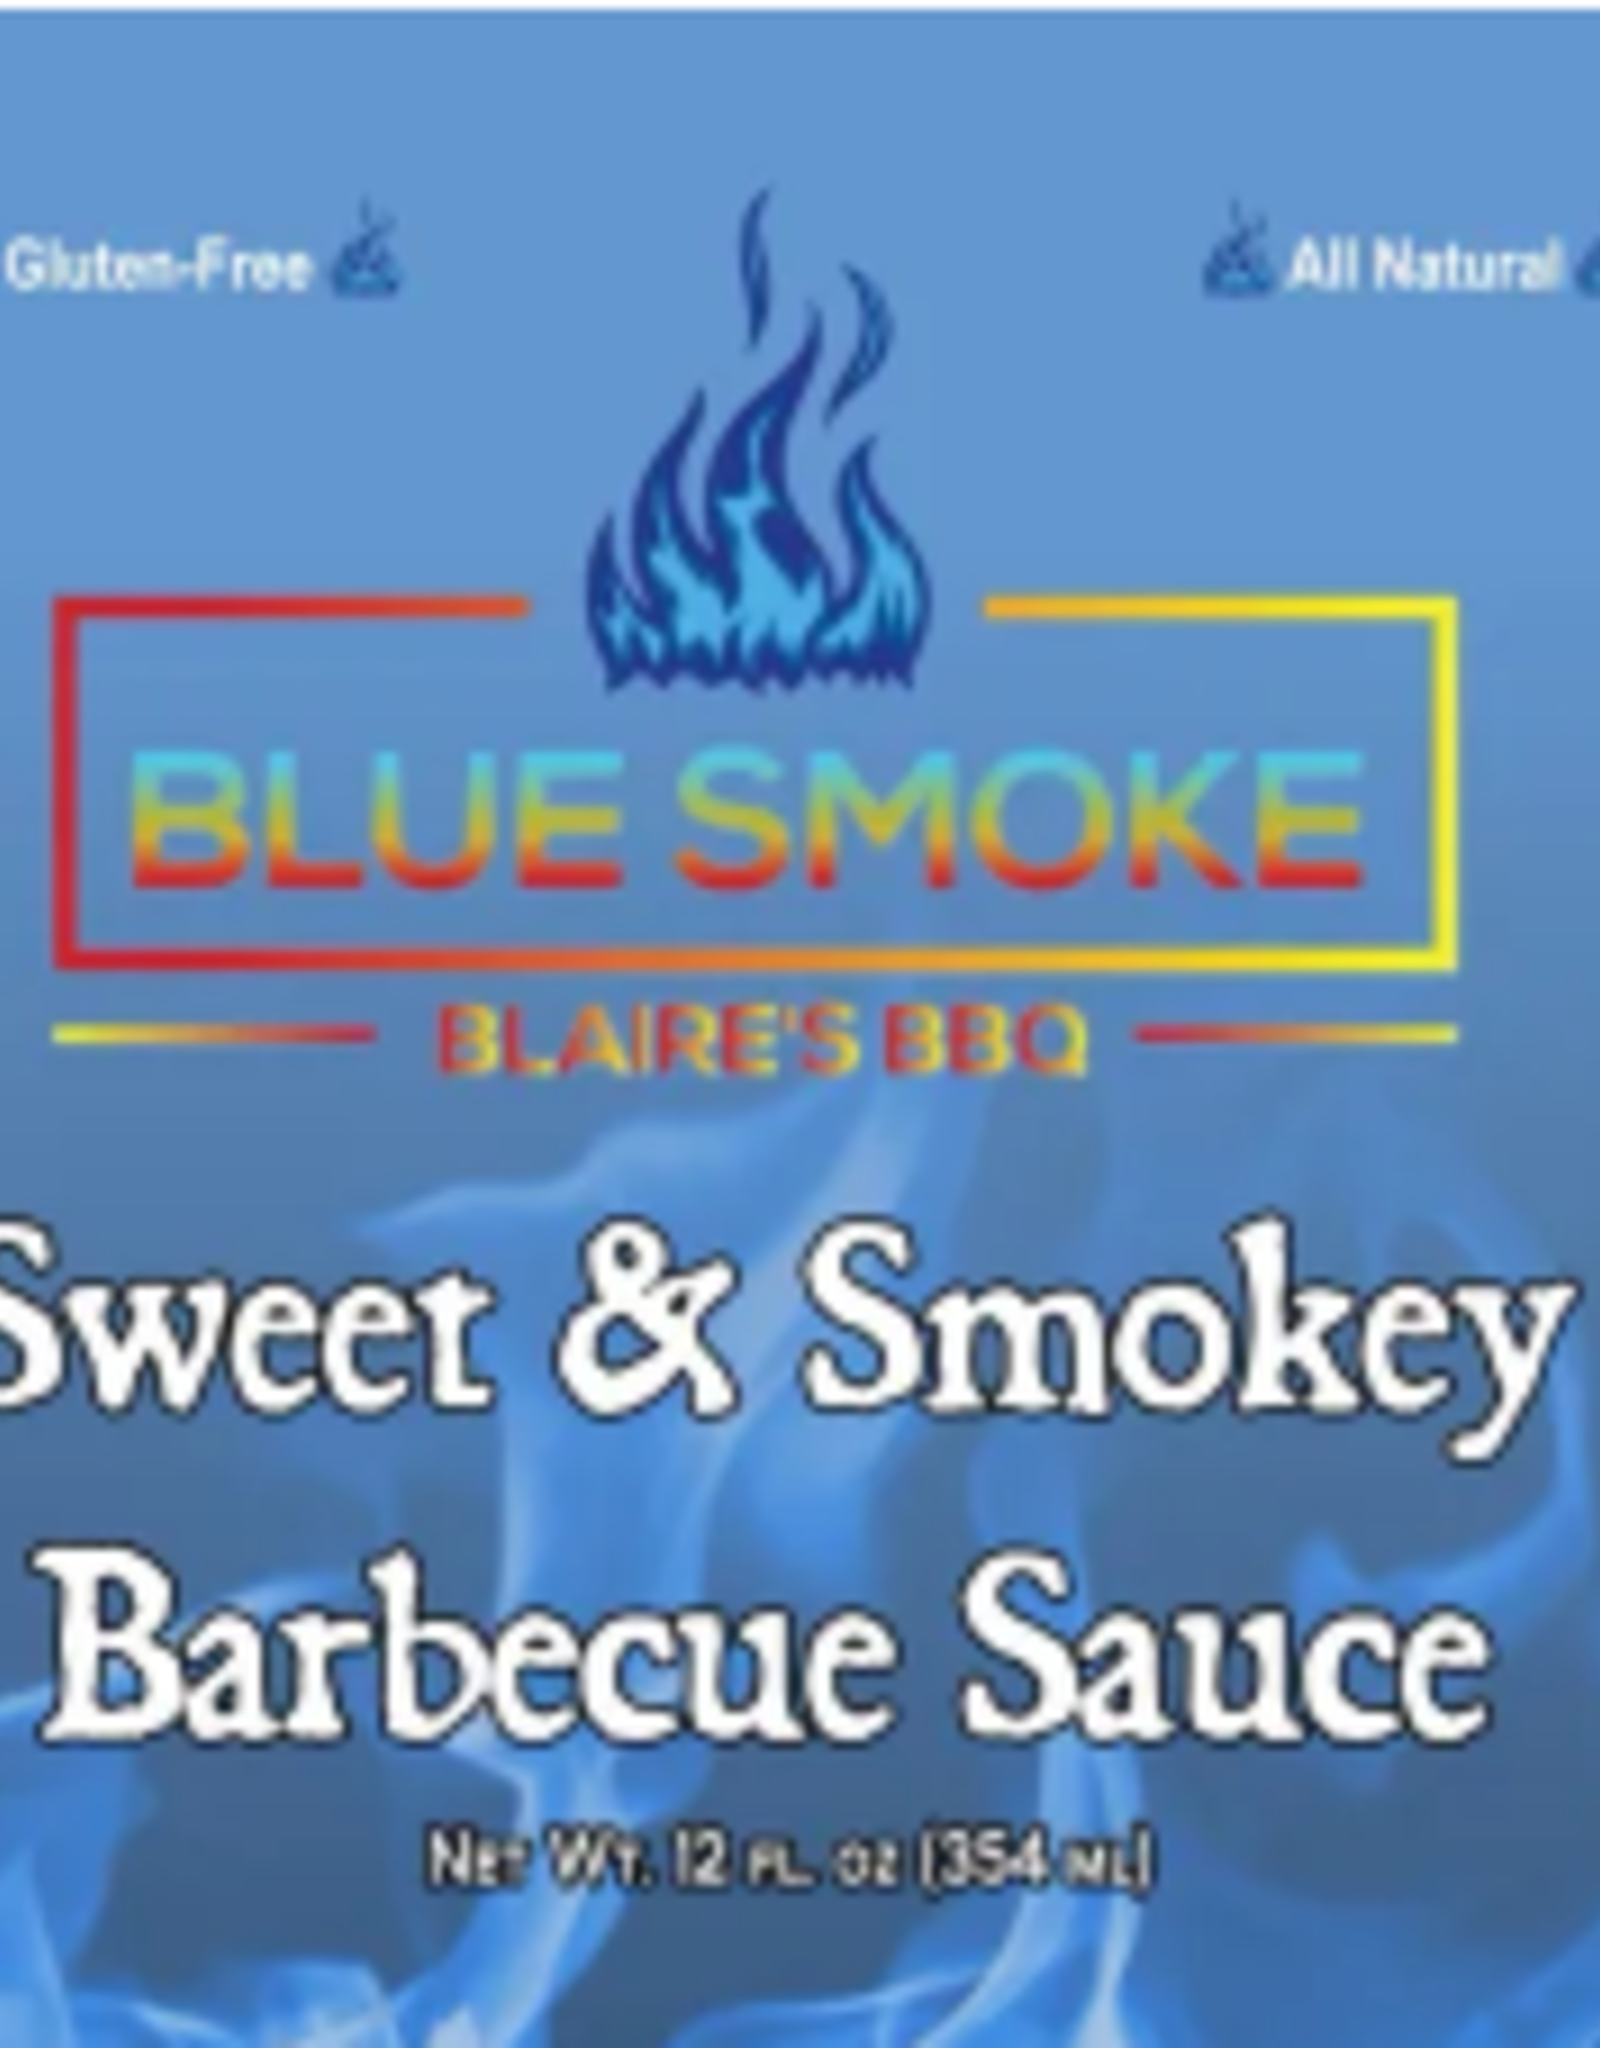 Blue Smoke Blue Smoke - Blaire's Sweet & Smokey BBQ Sauce (12 oz.)